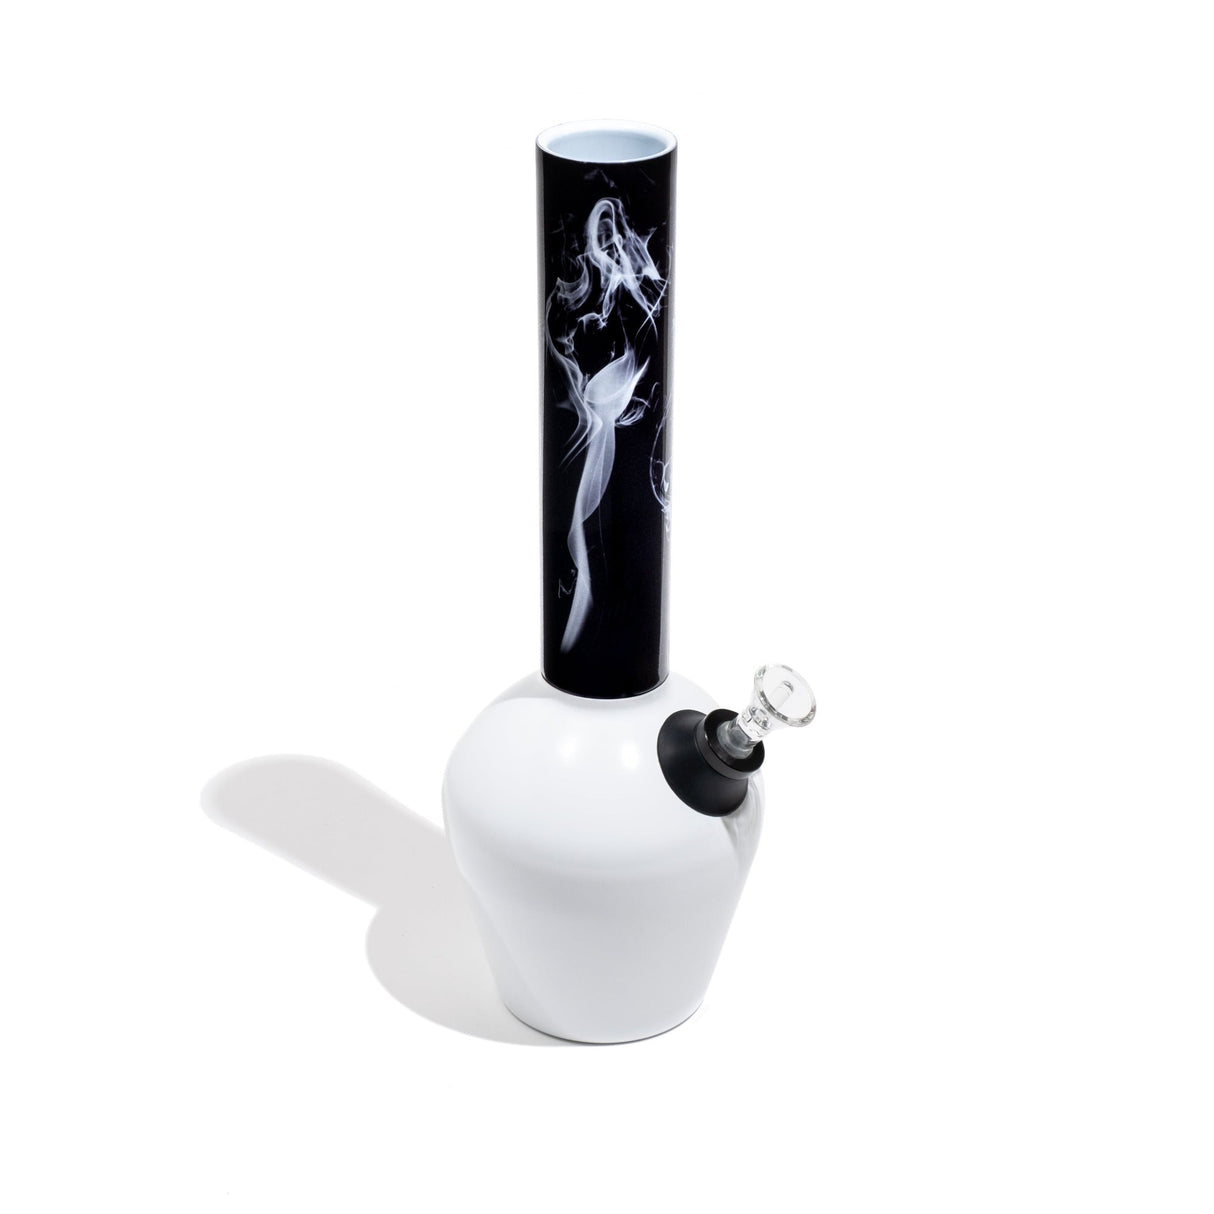 Chill Steel Pipes Black Smoke Neckpiece, mix & match series, sleek design, top view on white